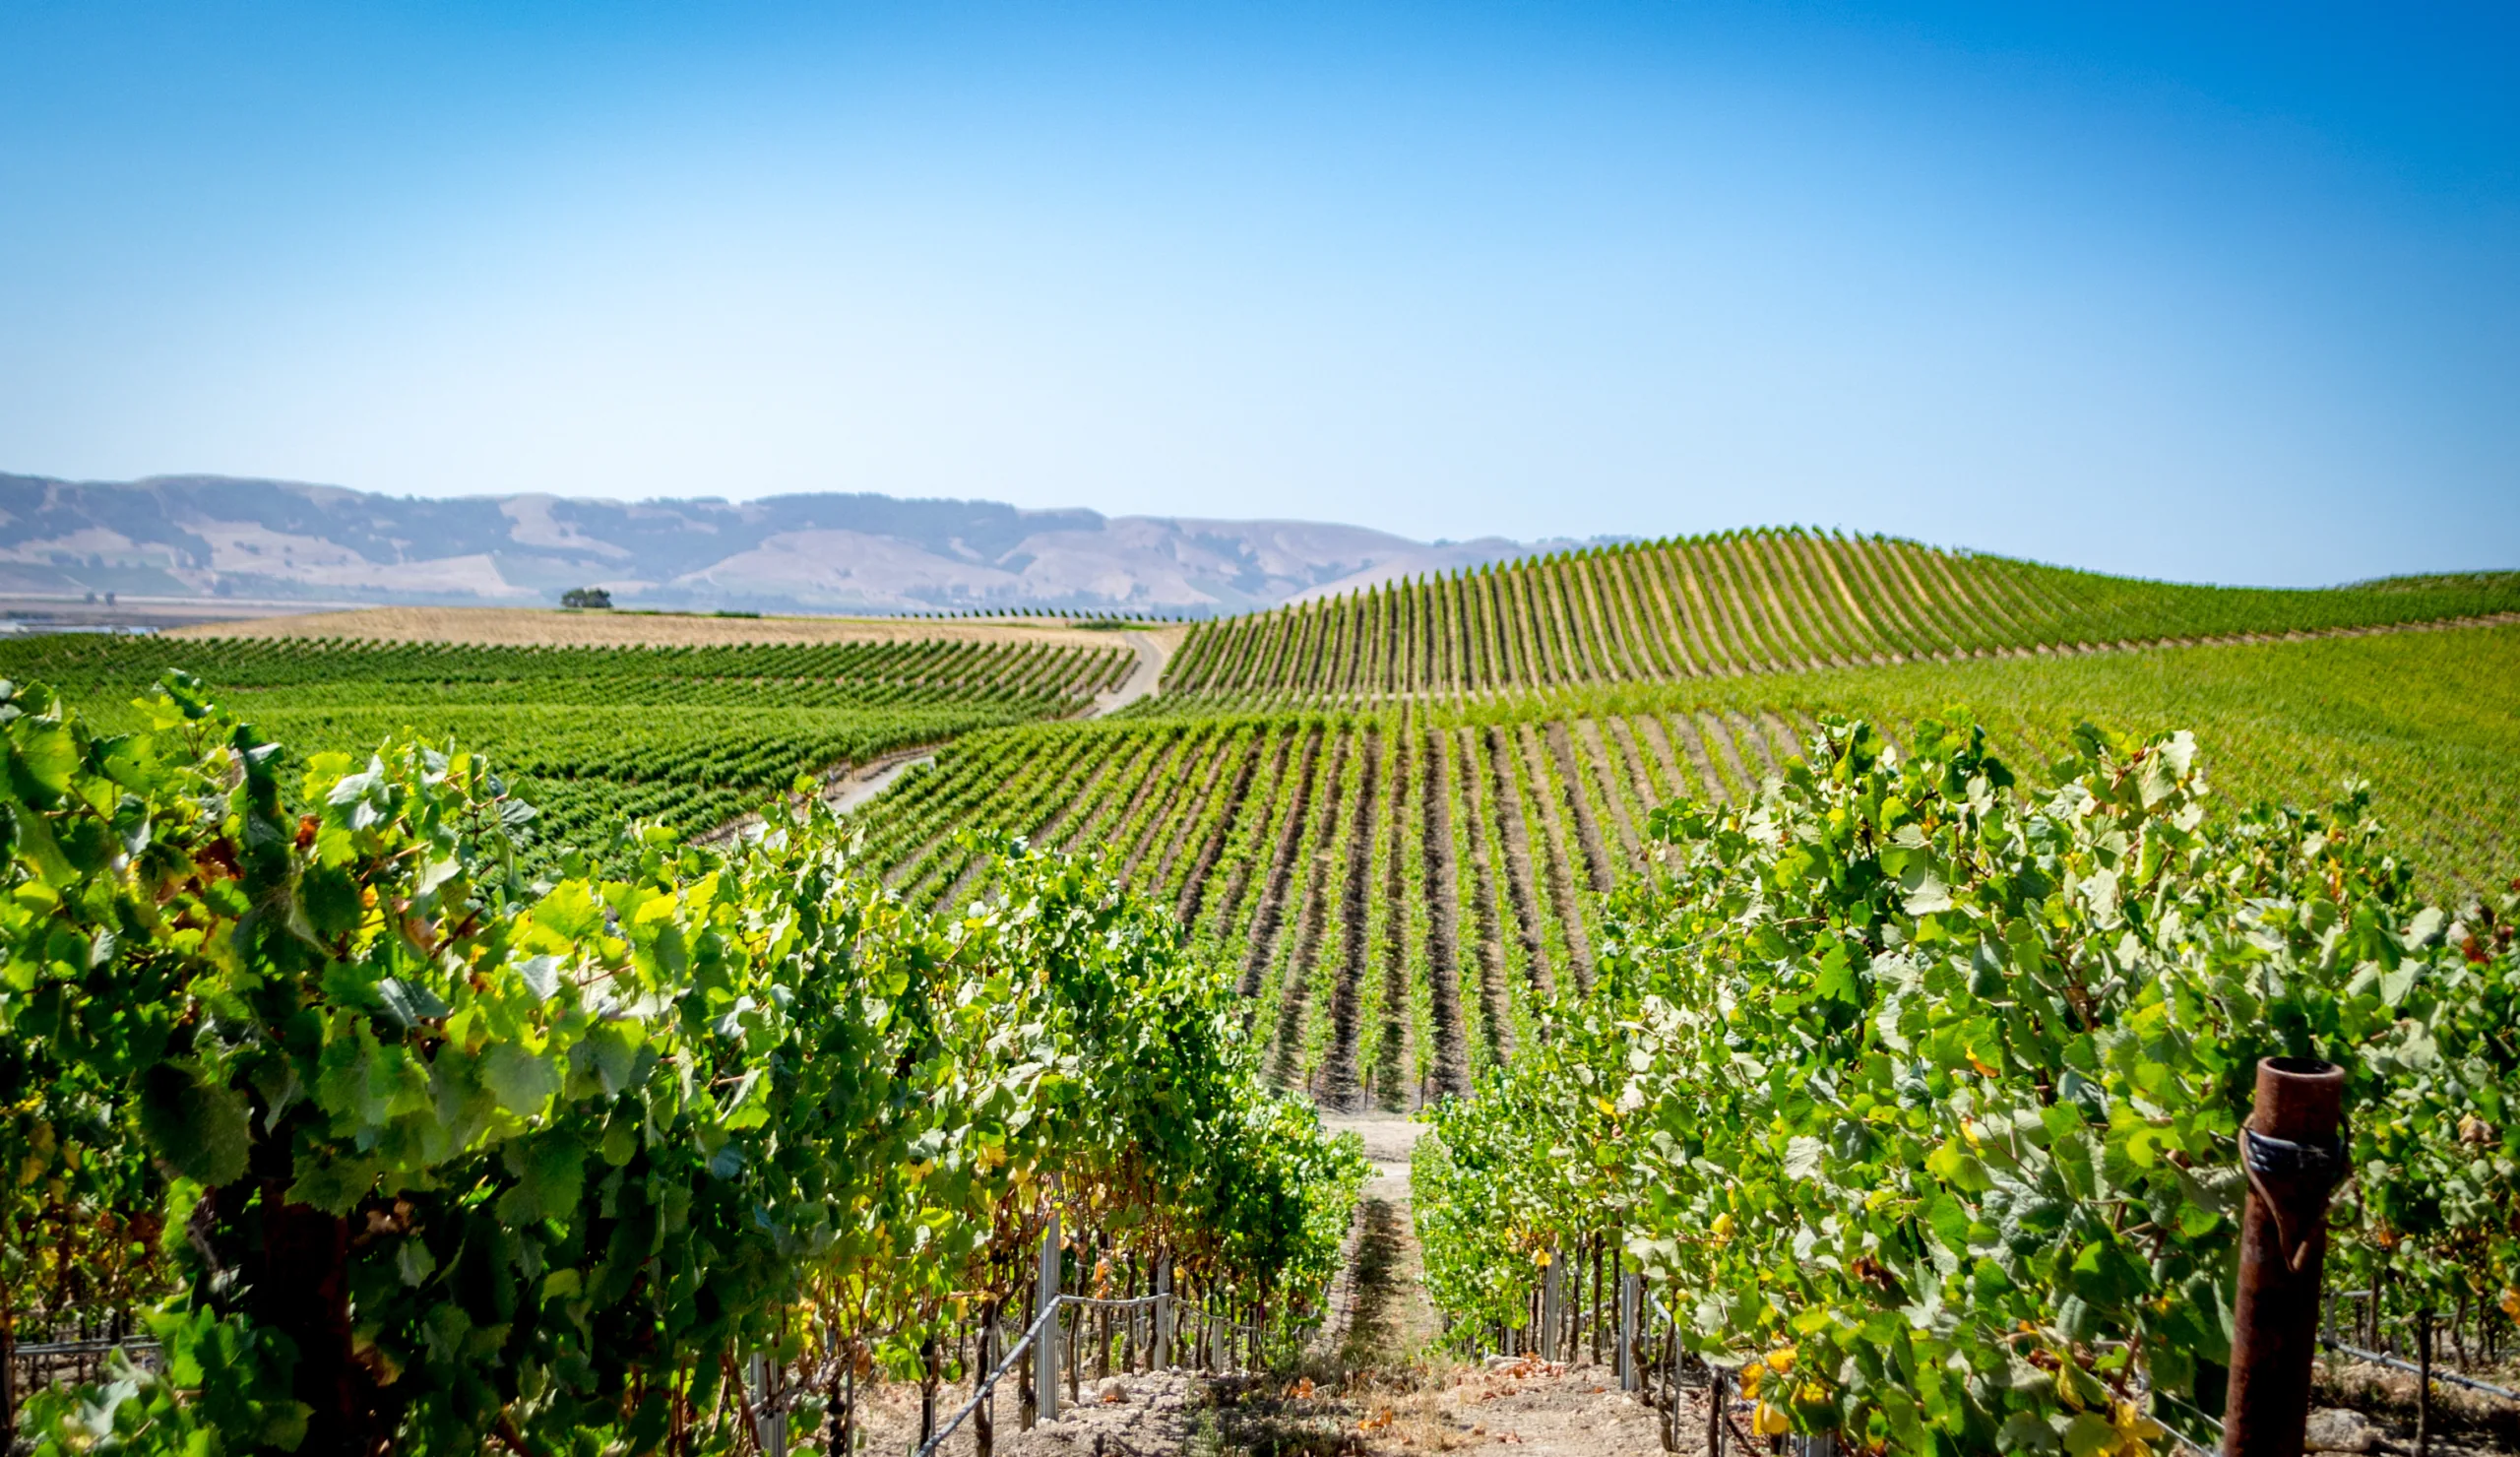 napa valley vineyard in California